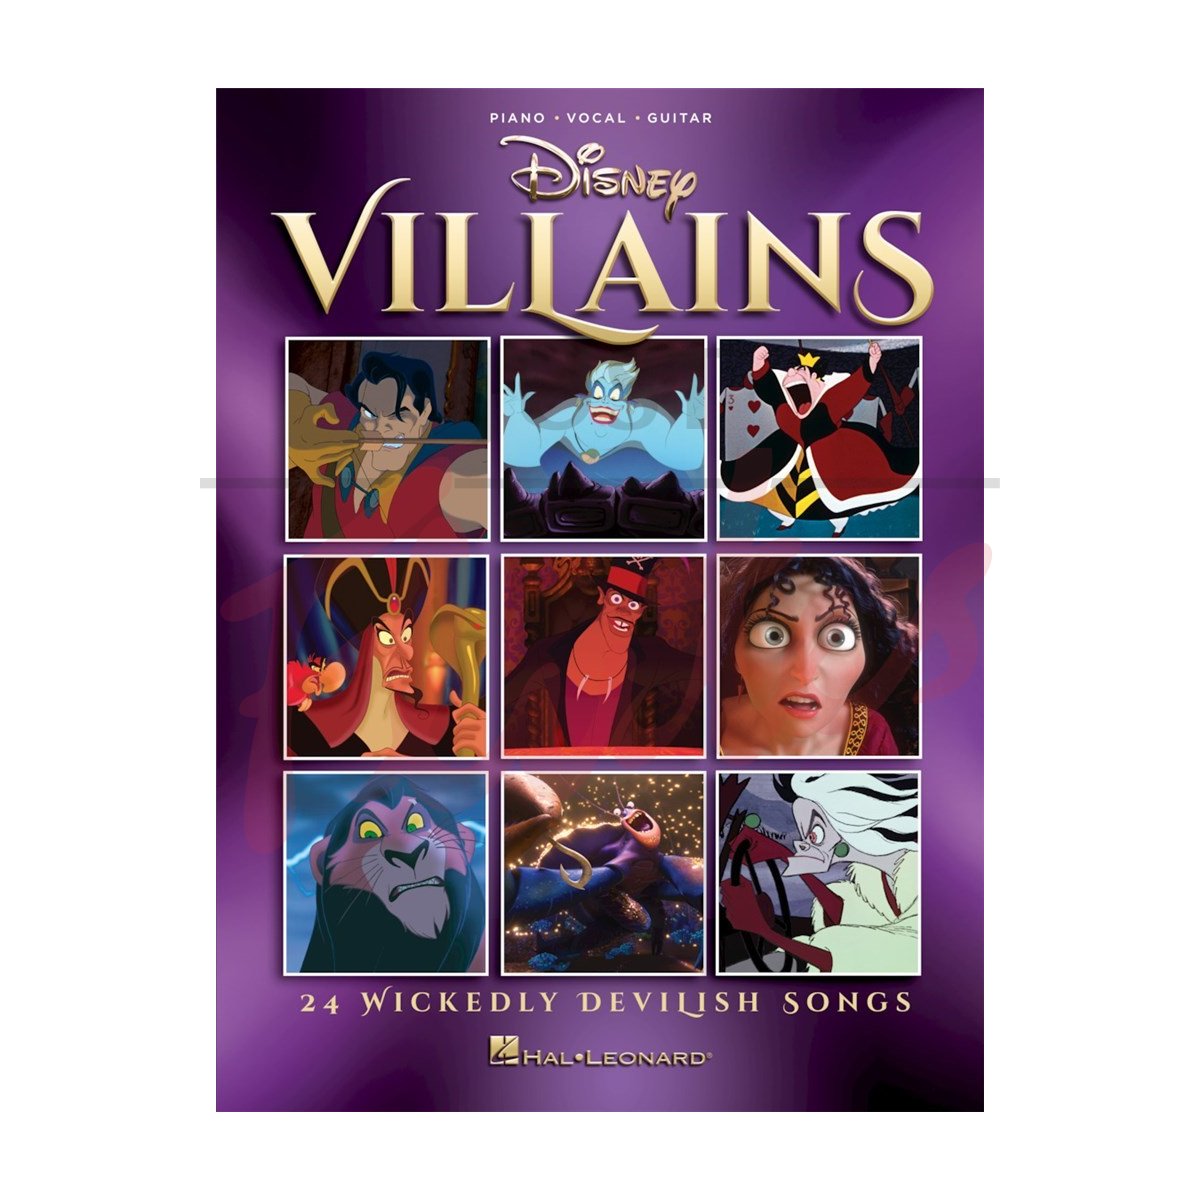 Disney Villains for Piano, Vocal and Guitar